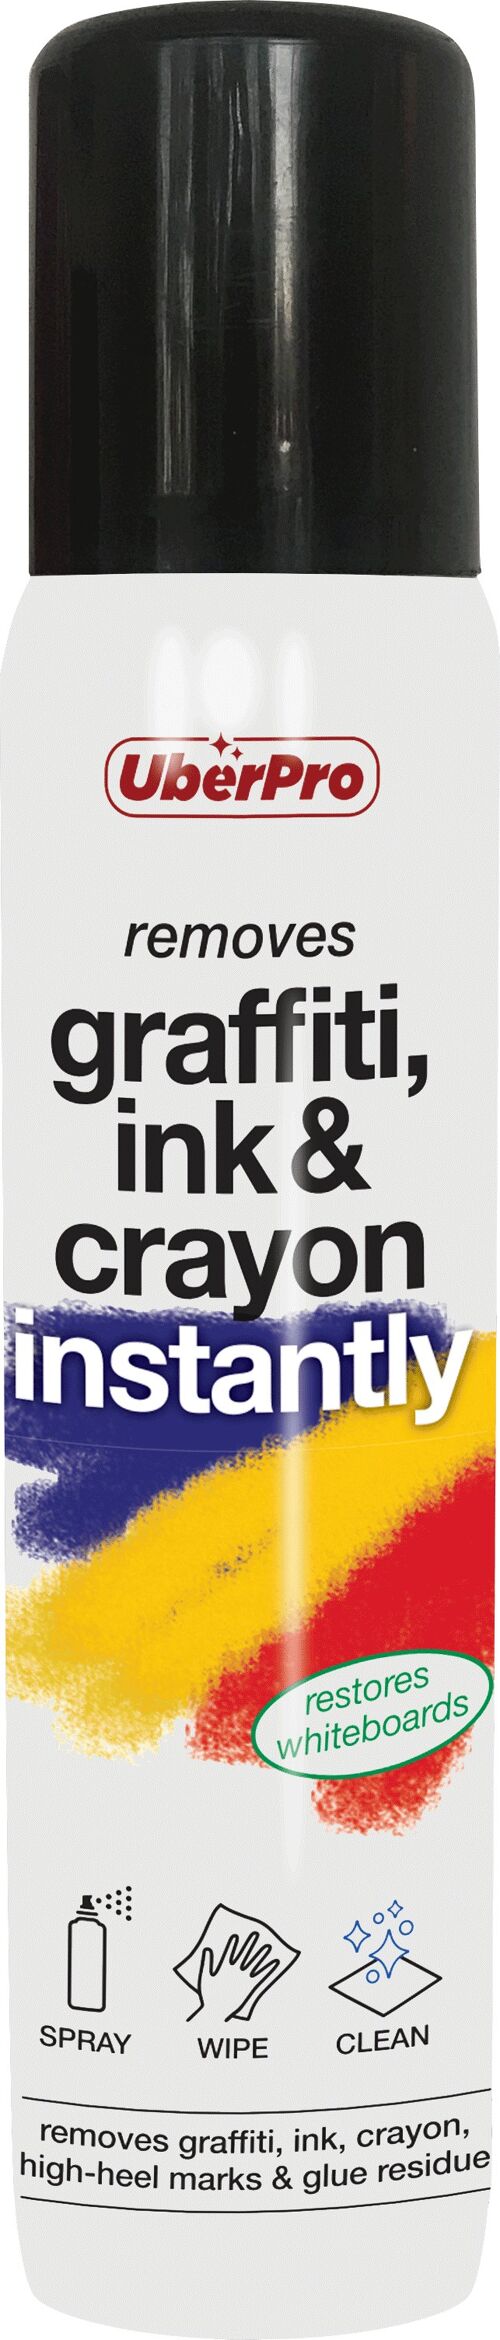 Graffiti, ink & crayon remover